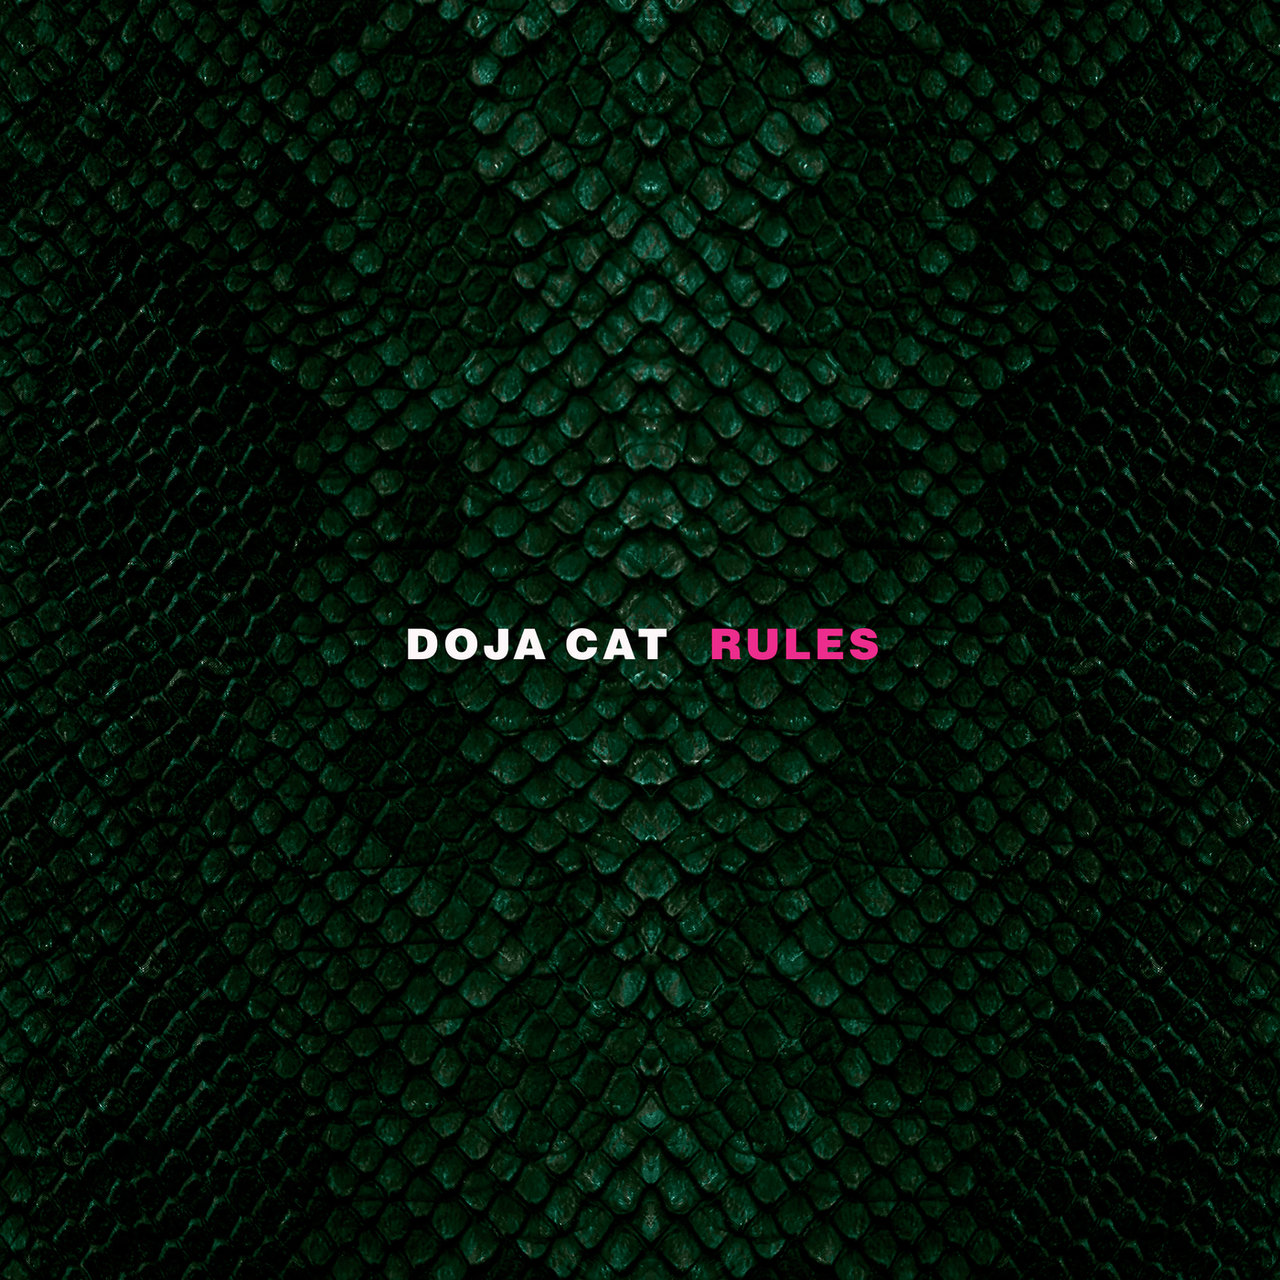 Doja Cat - Rules (Cover)